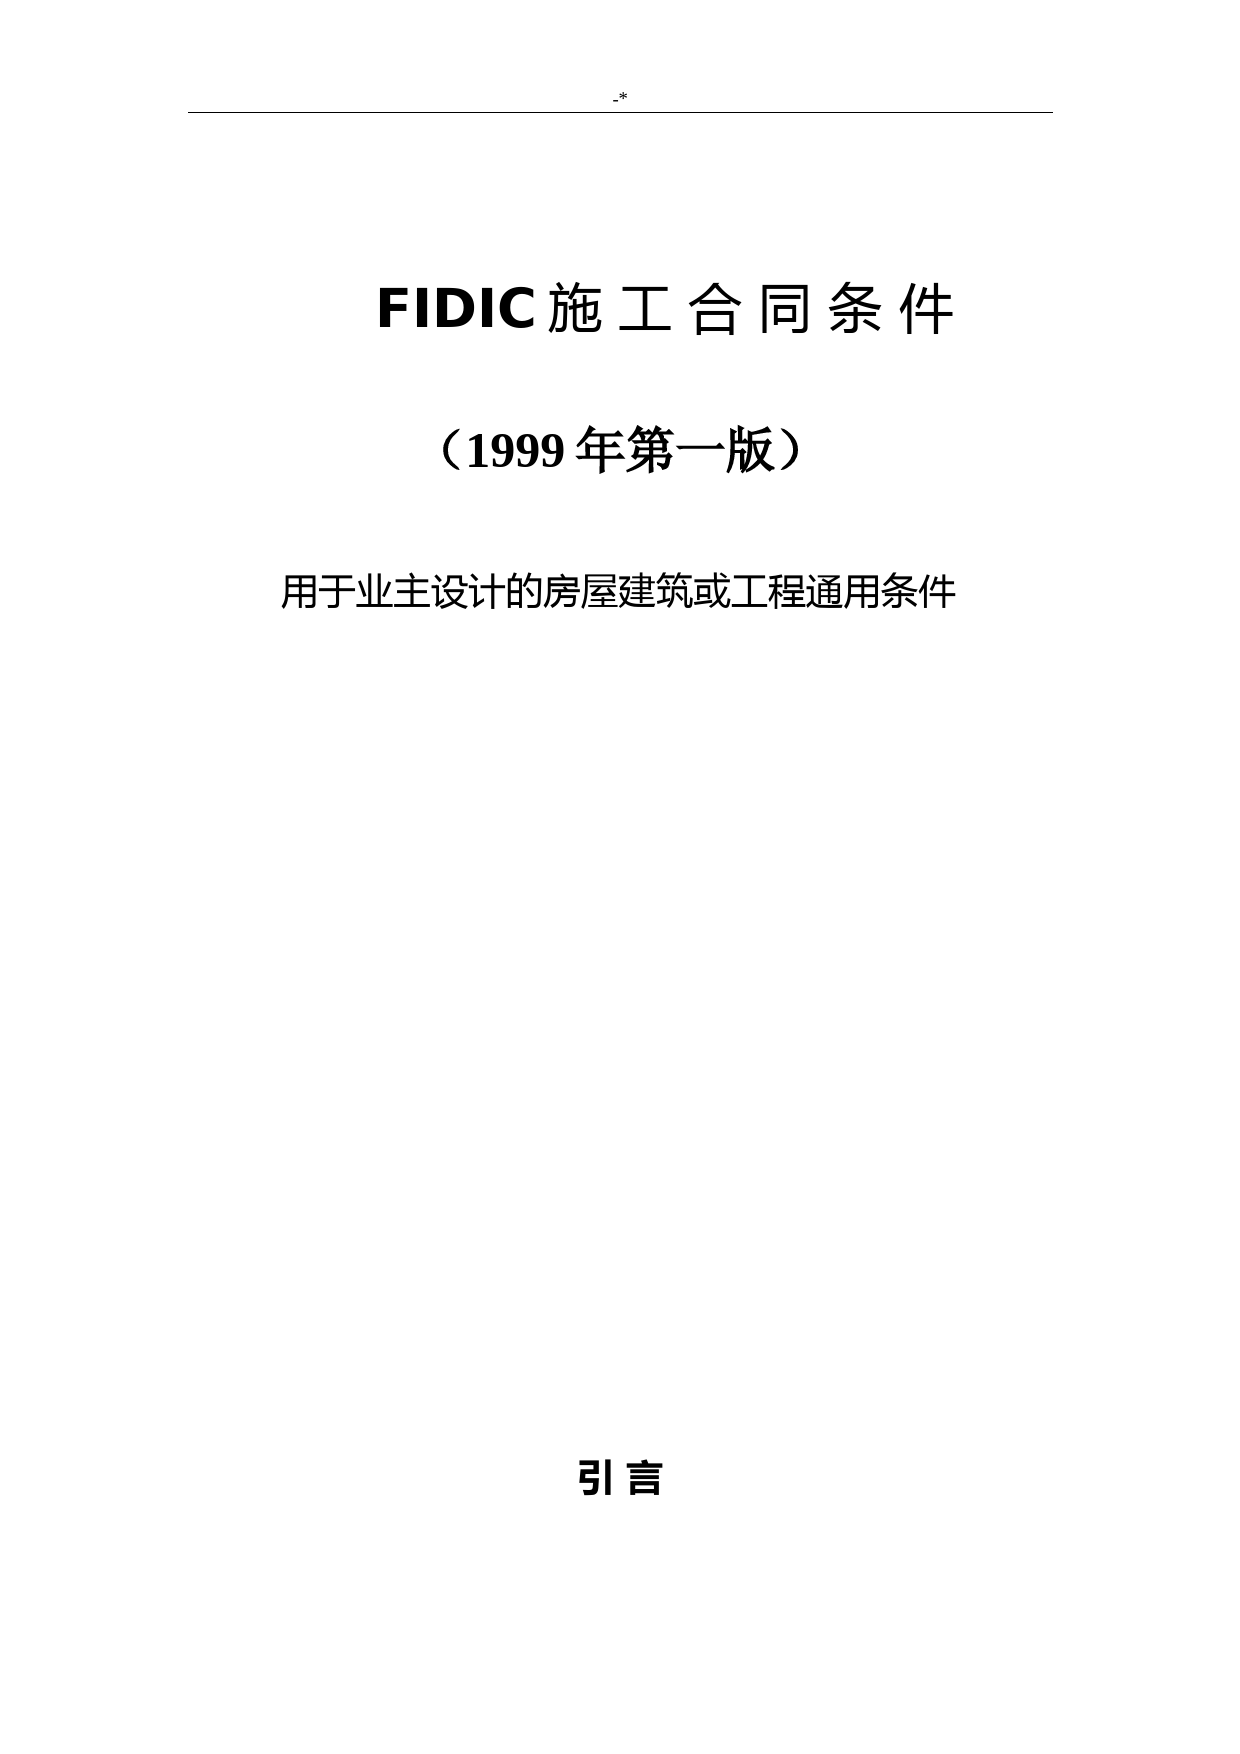 FIDIC99版红皮书施工协议合同条件